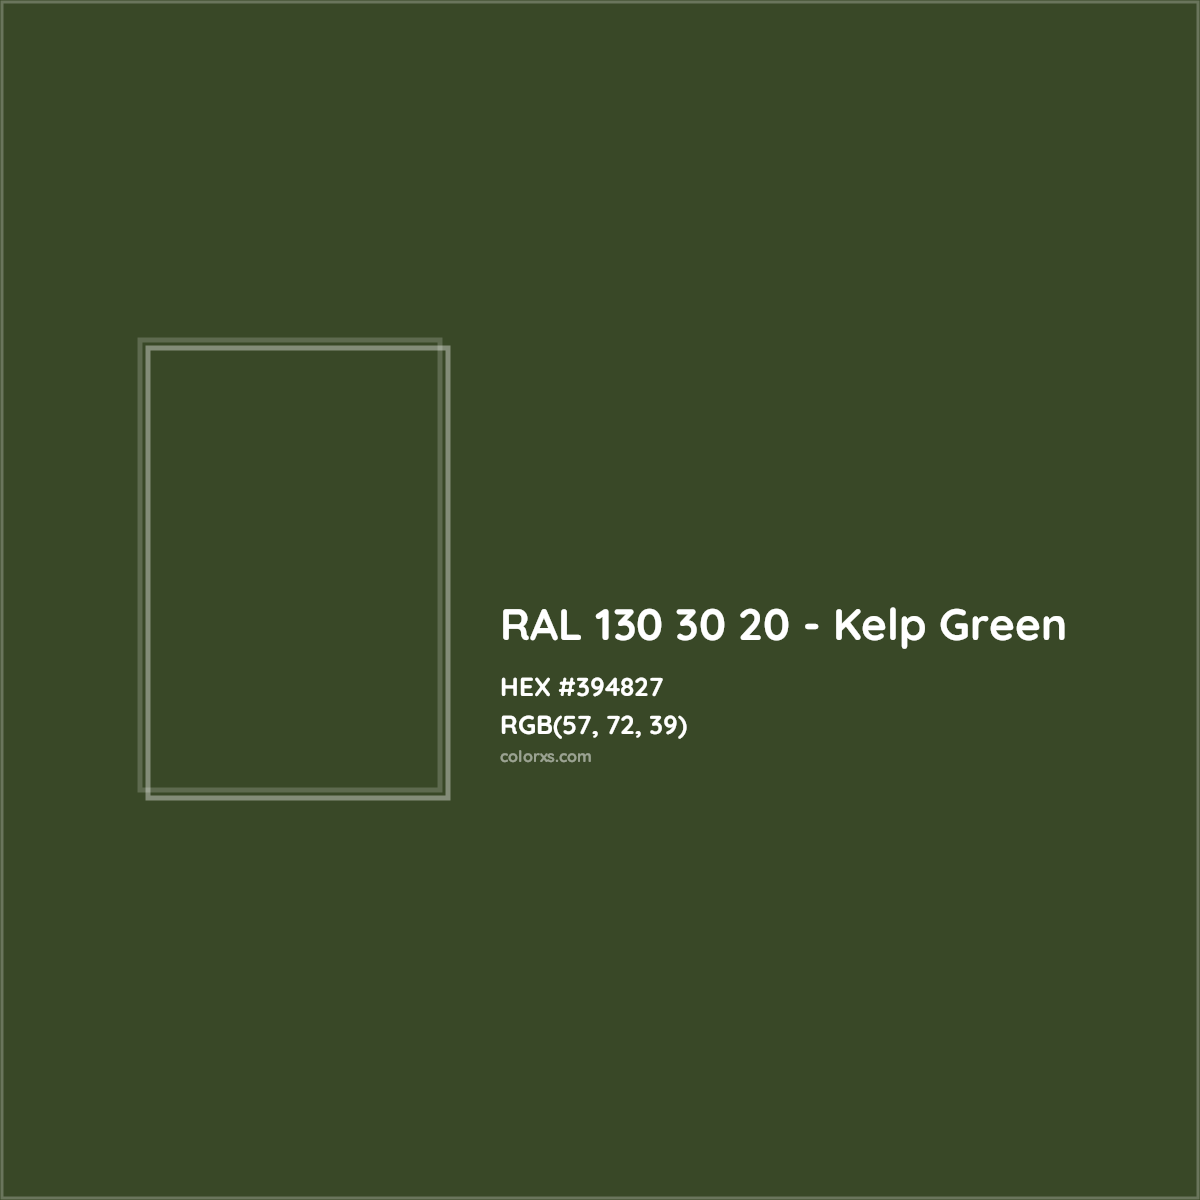 HEX #394827 RAL 130 30 20 - Kelp Green CMS RAL Design - Color Code